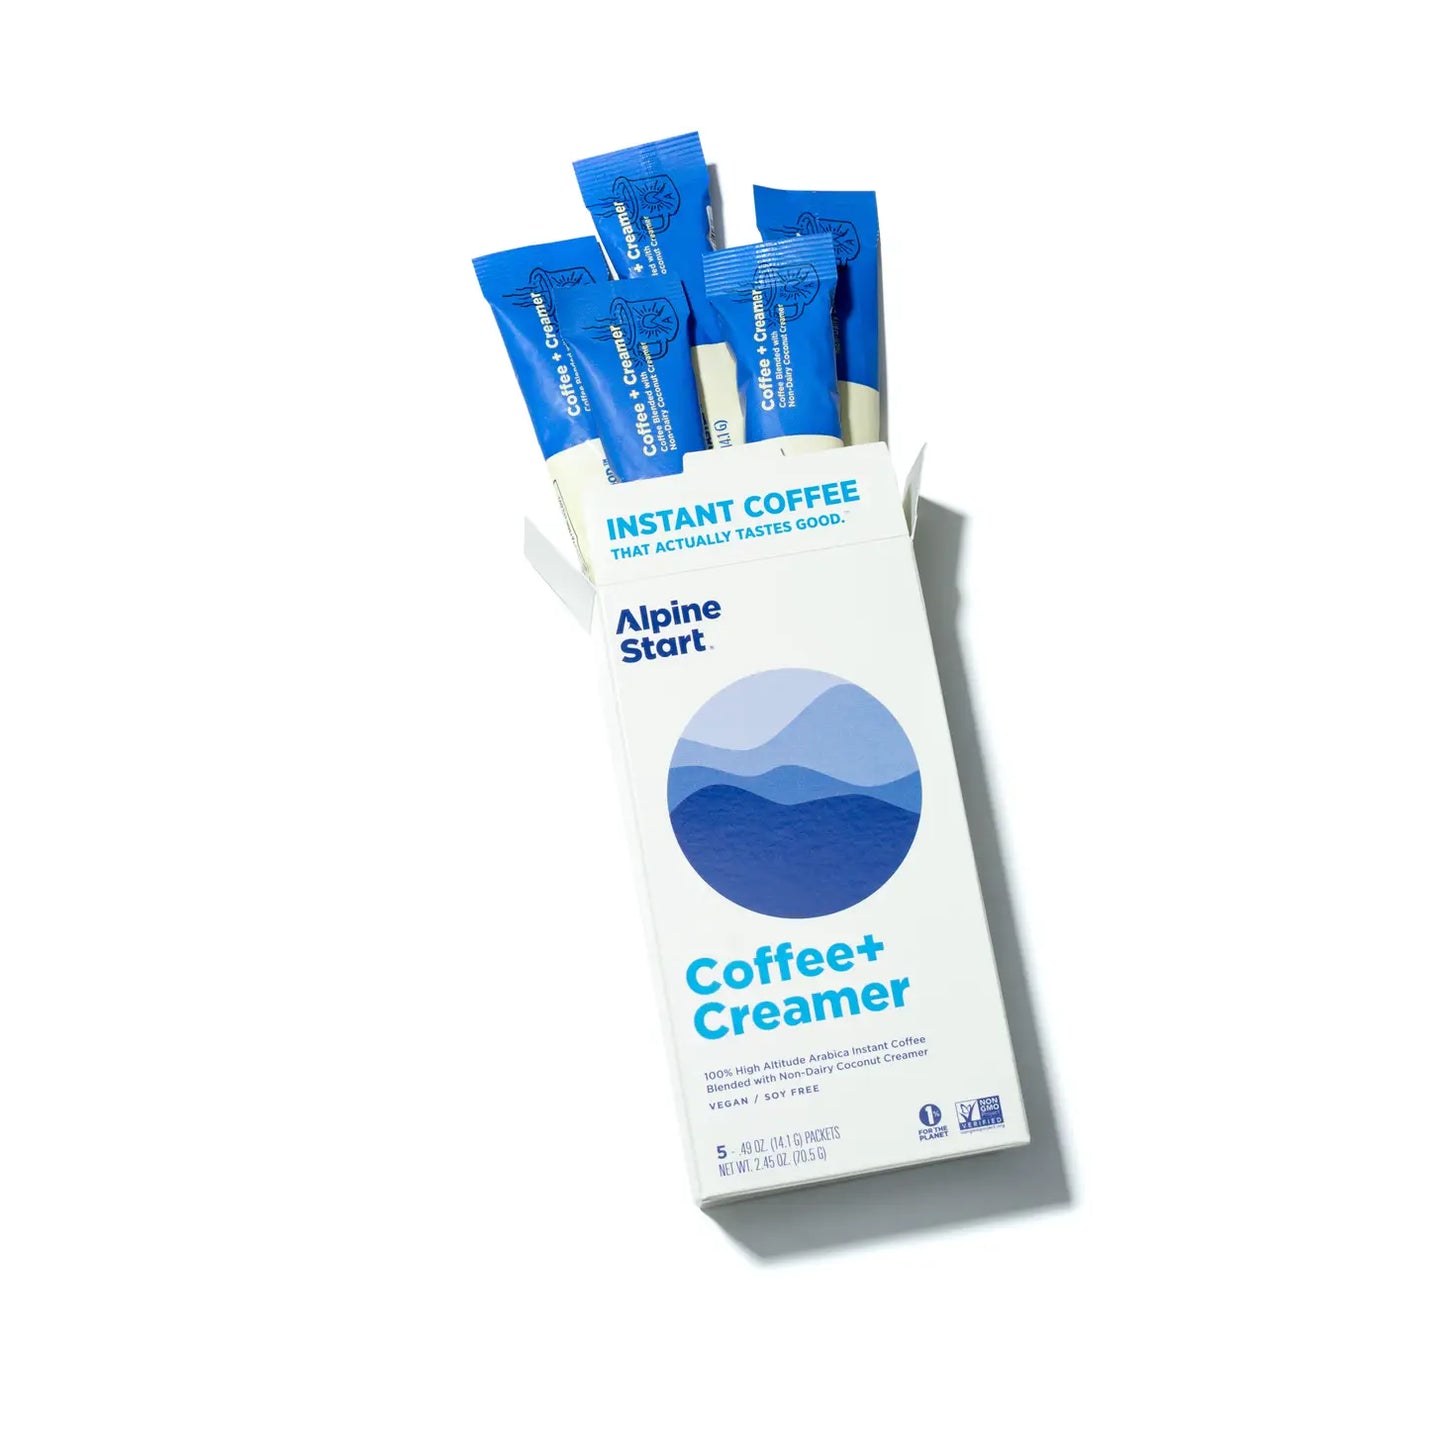 Coffee+Creamer Cartons